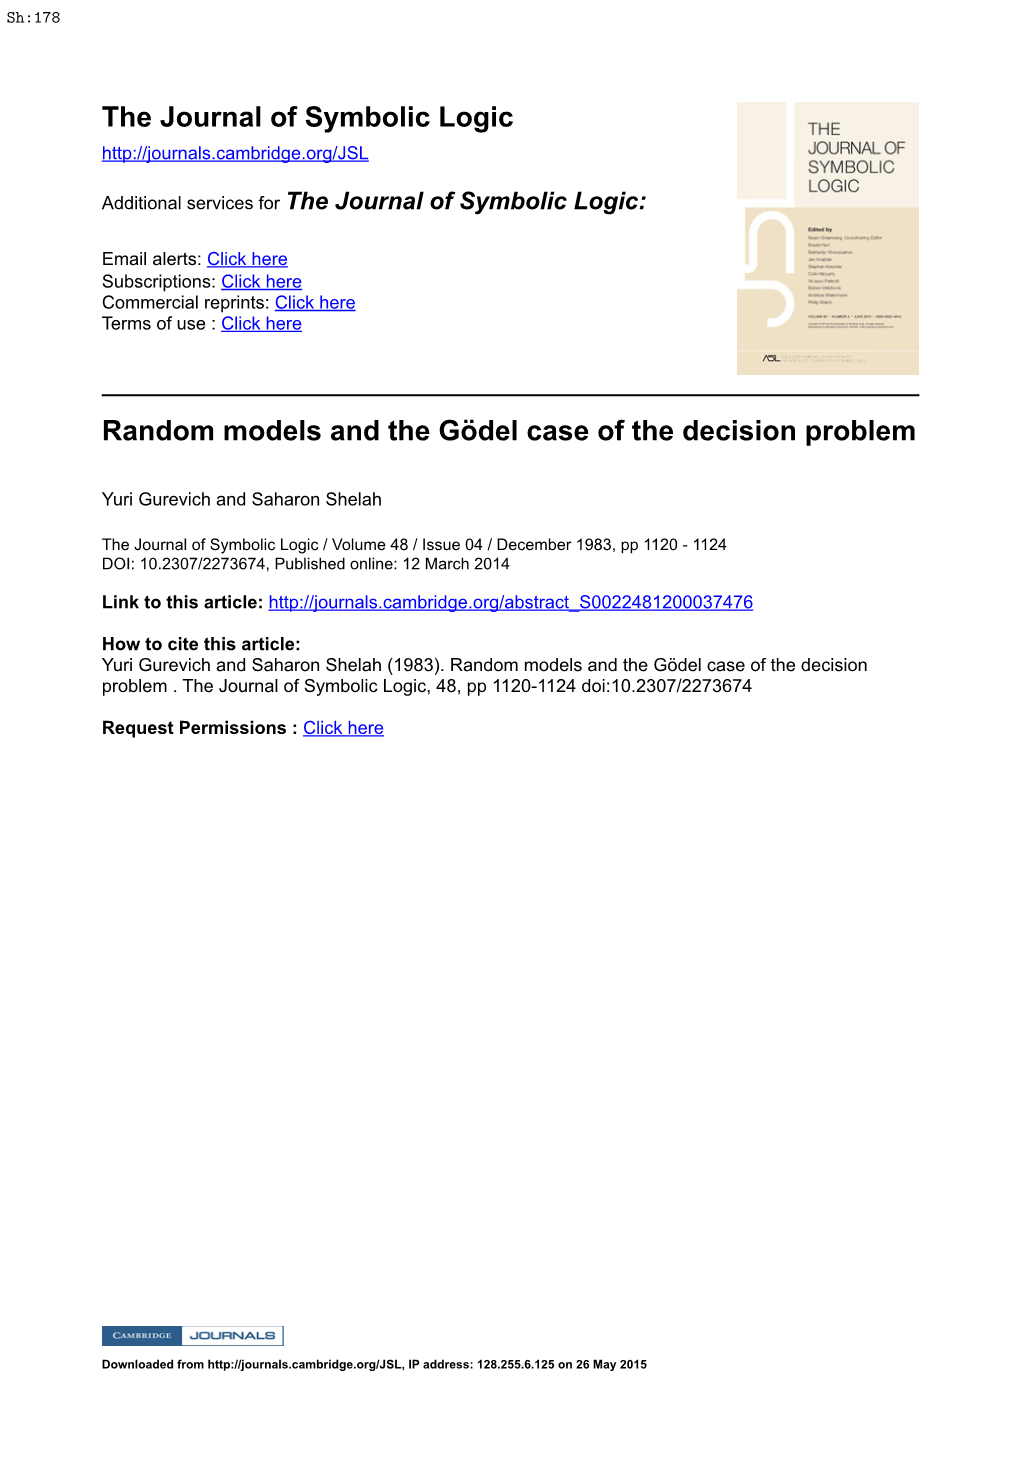 The Journal of Symbolic Logic Random Models and the Gödel